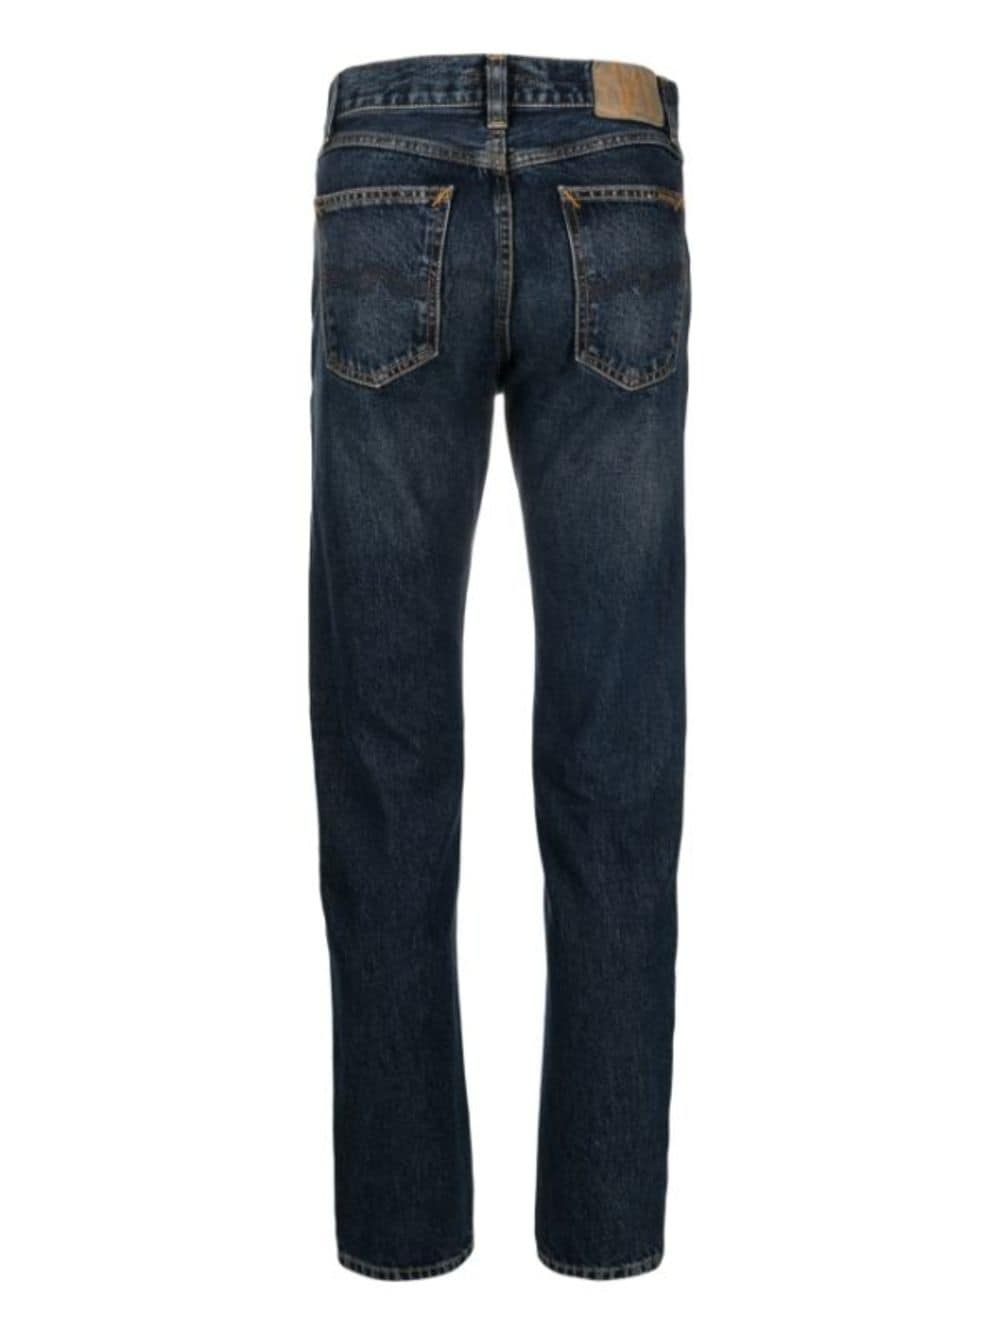 Gritty Jackson skinny-leg jeans - 2